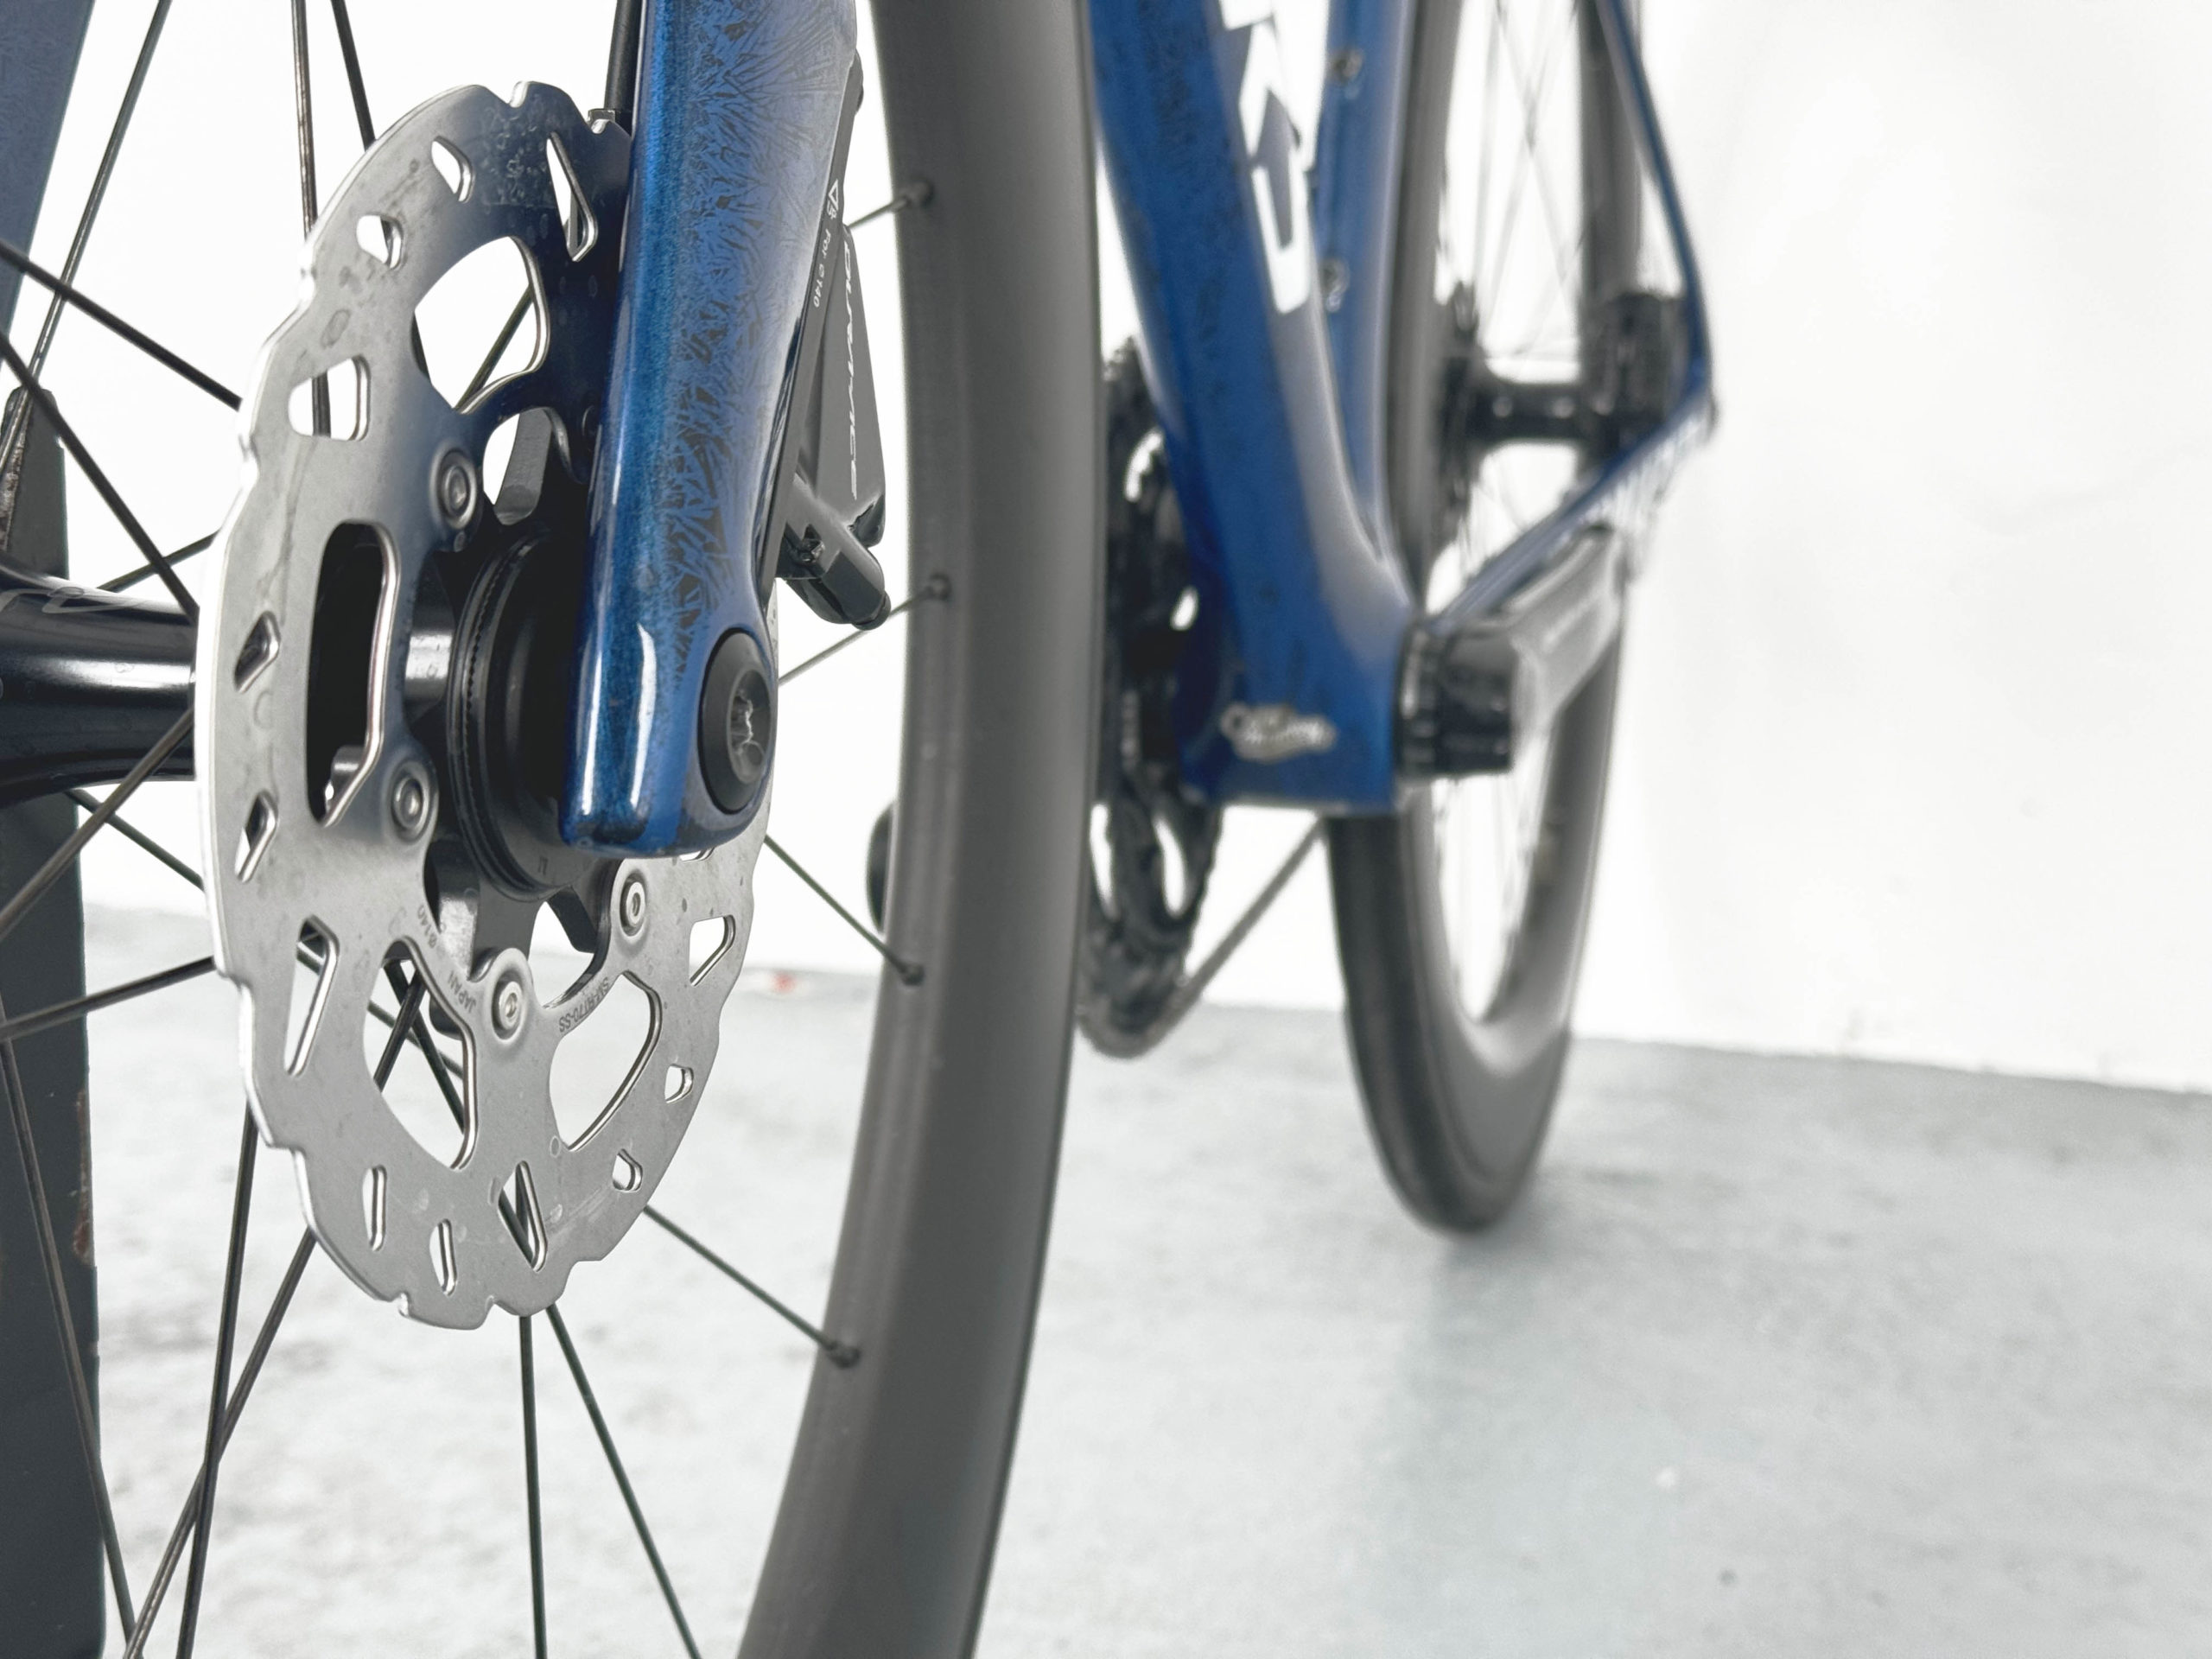 Road Bike Specialized Venge S-Works Shimano Dura-Ace di2 / Roues Roval CL 64 rapide Noir / Bleu